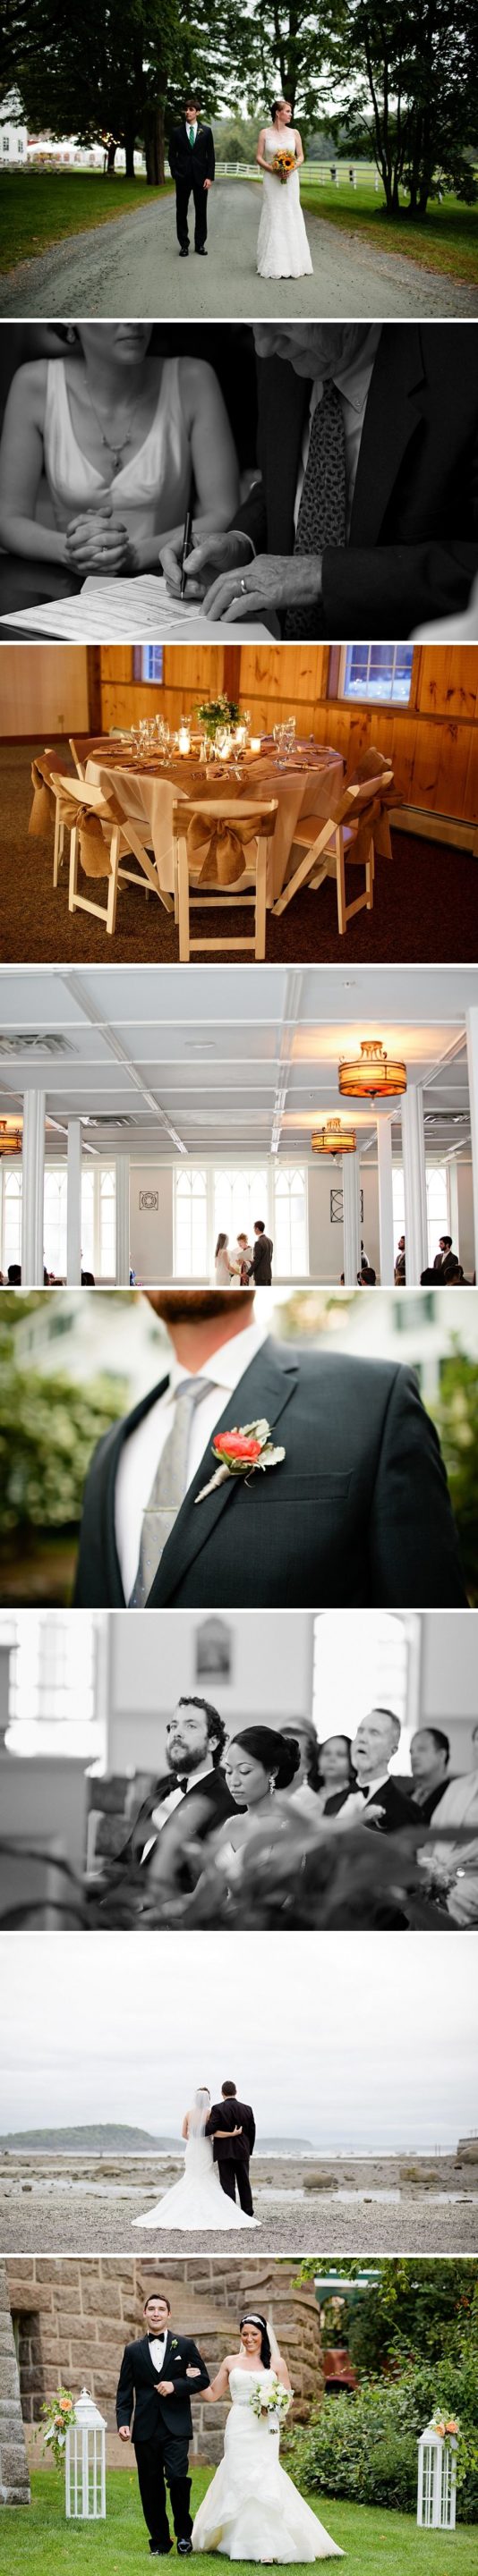 Maine-wedding-photographer-best-wedding-photos-of-2014-0006